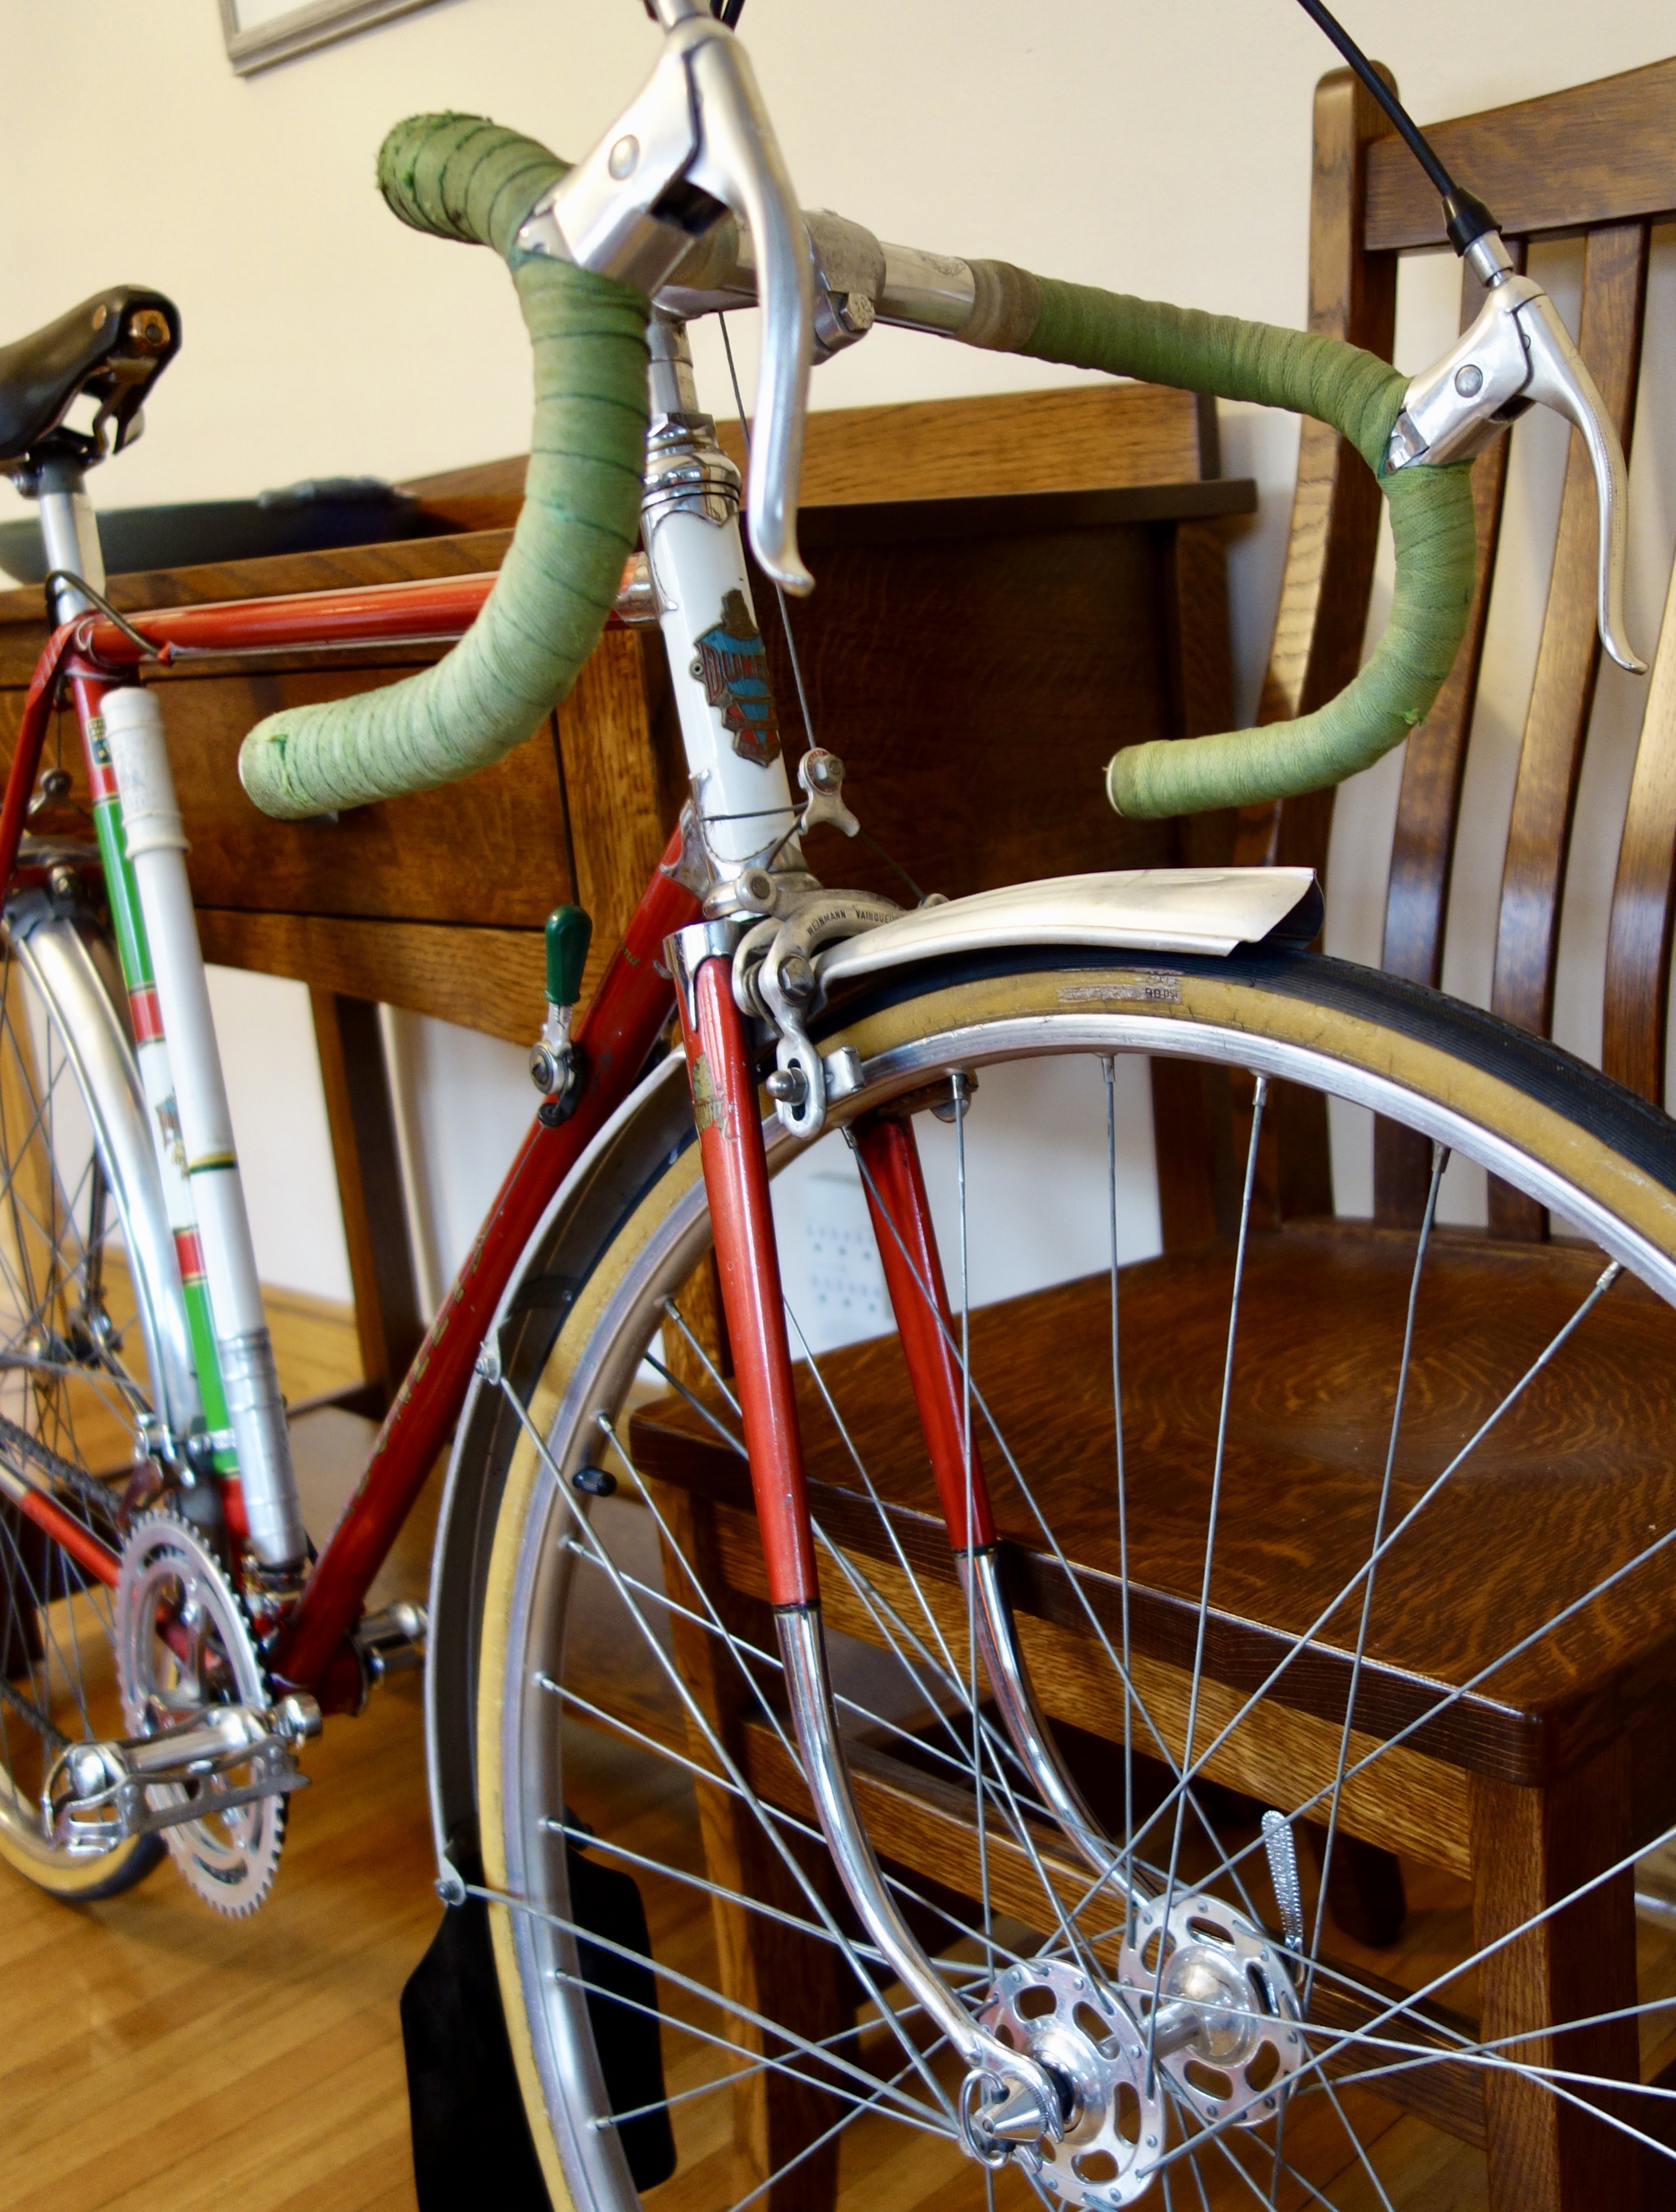 Details about   Classic Bicycle TUR MECCANICA BI BICI Postcard new